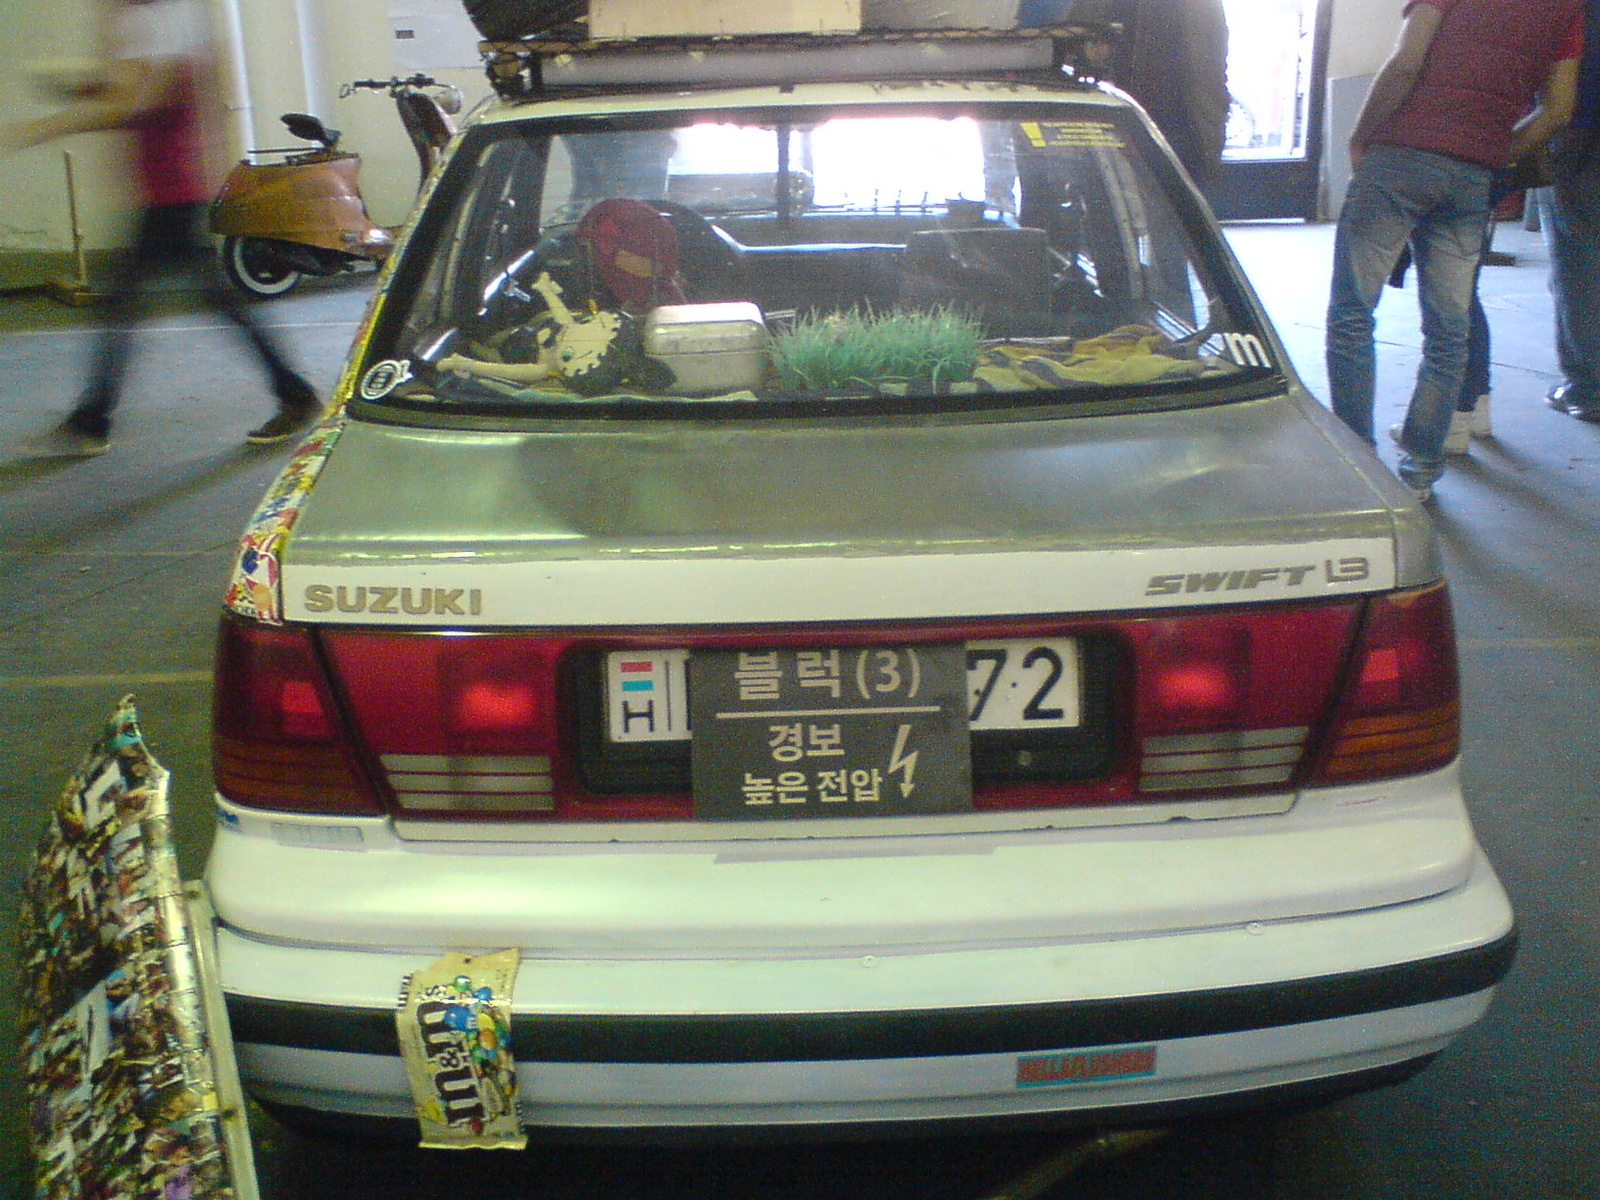 Suzuki Swift Sedan far